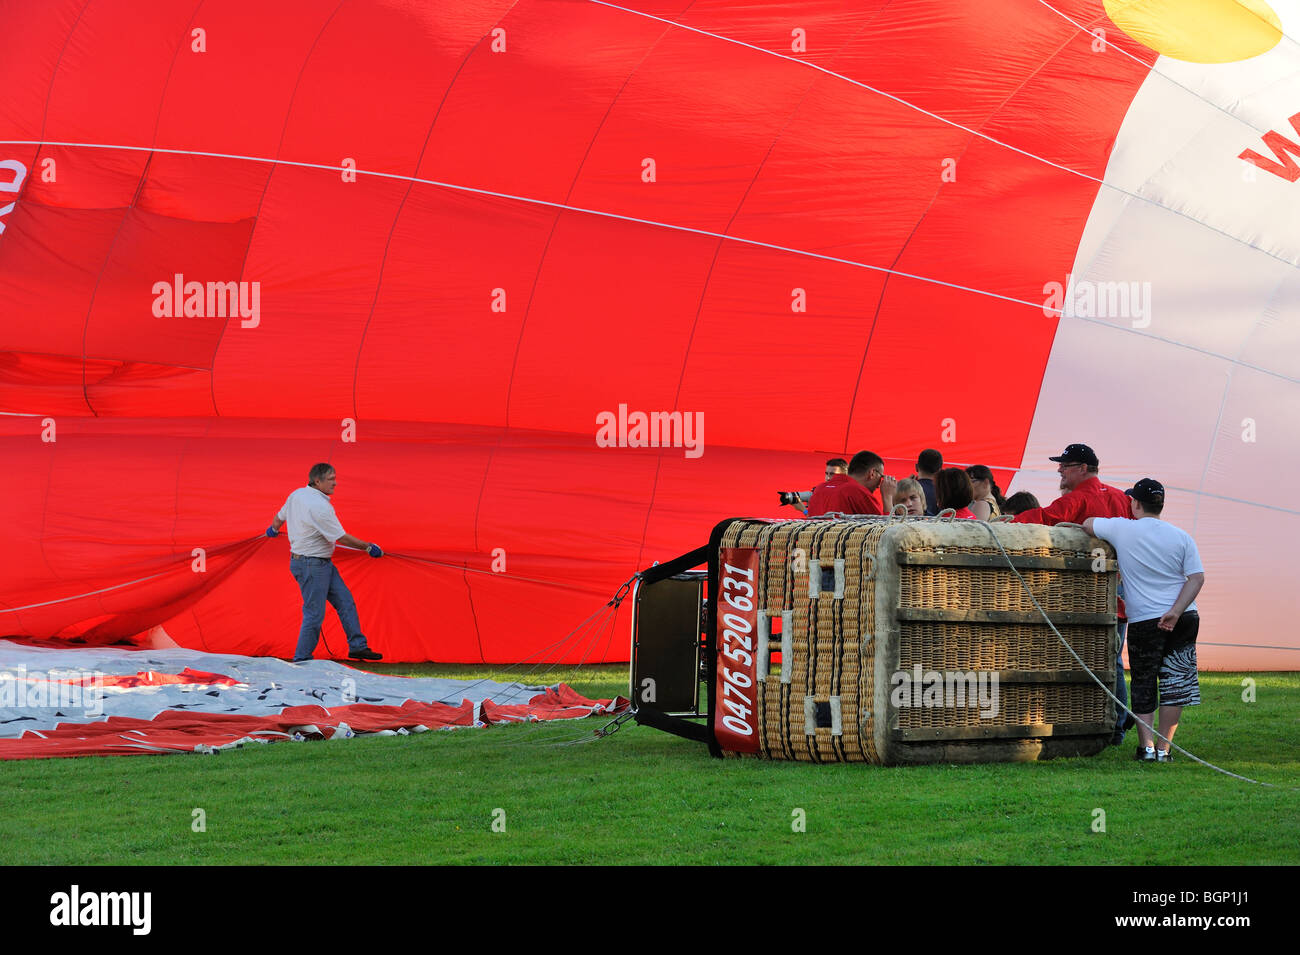 Balloonists / Aeronauts preparing hot-air balloon for taking off during hot air ballooning meeting Stock Photo